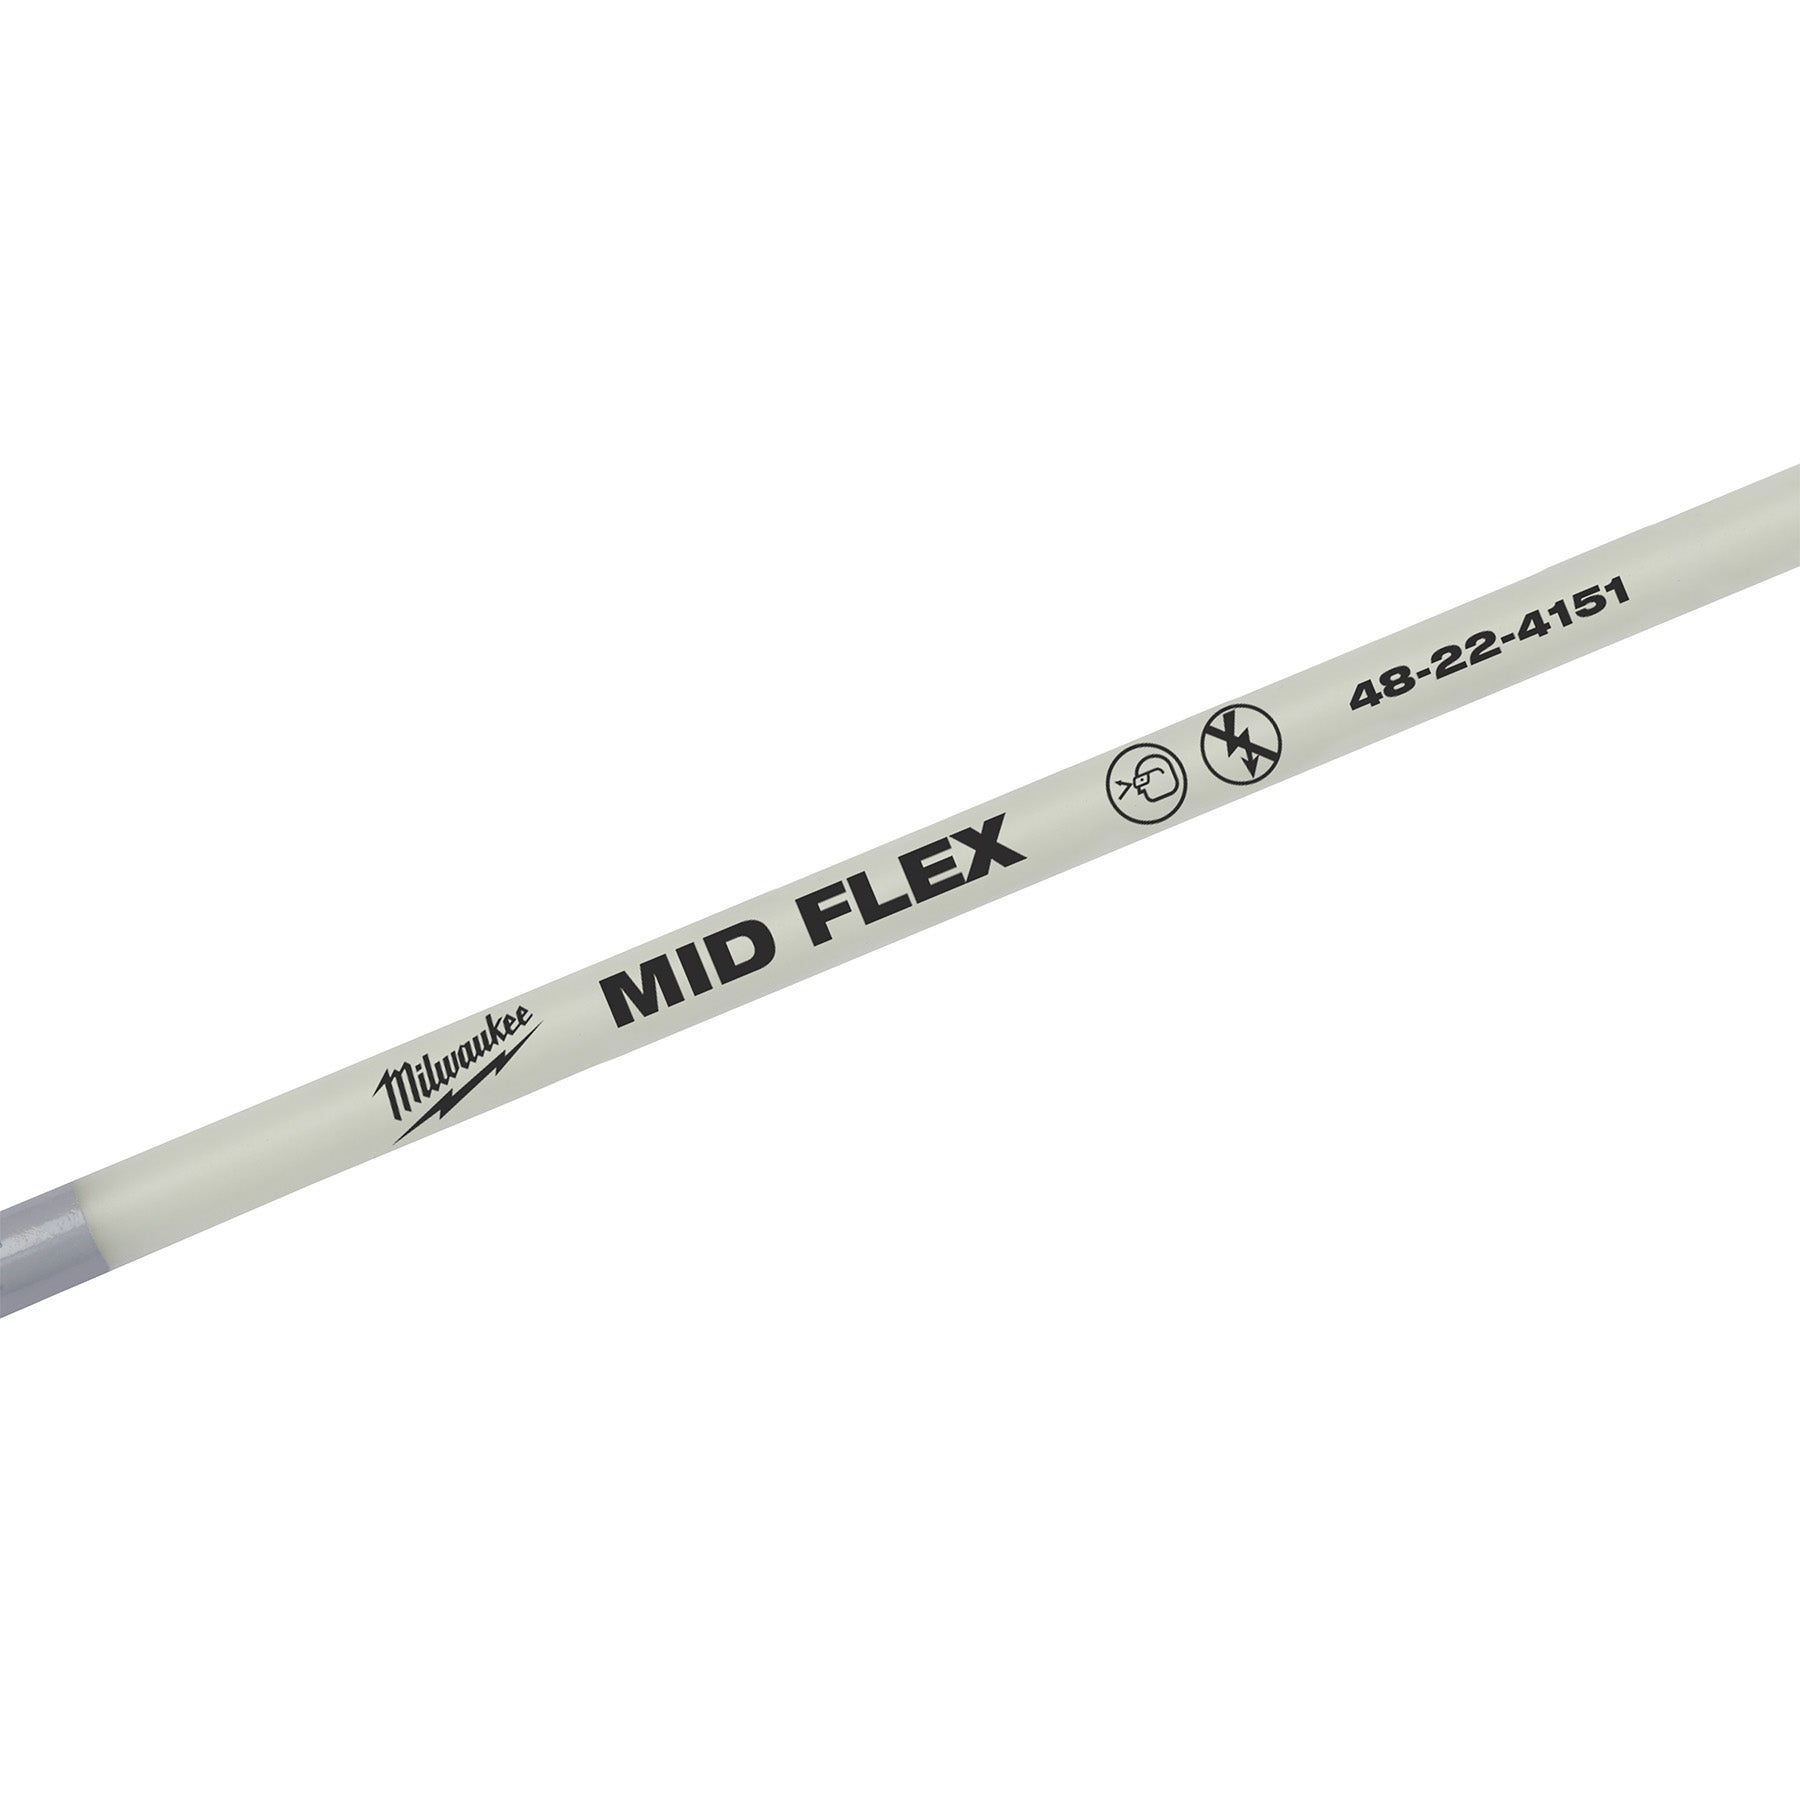 Fish Stick Combo Kit Length - 300.0 in  (25')